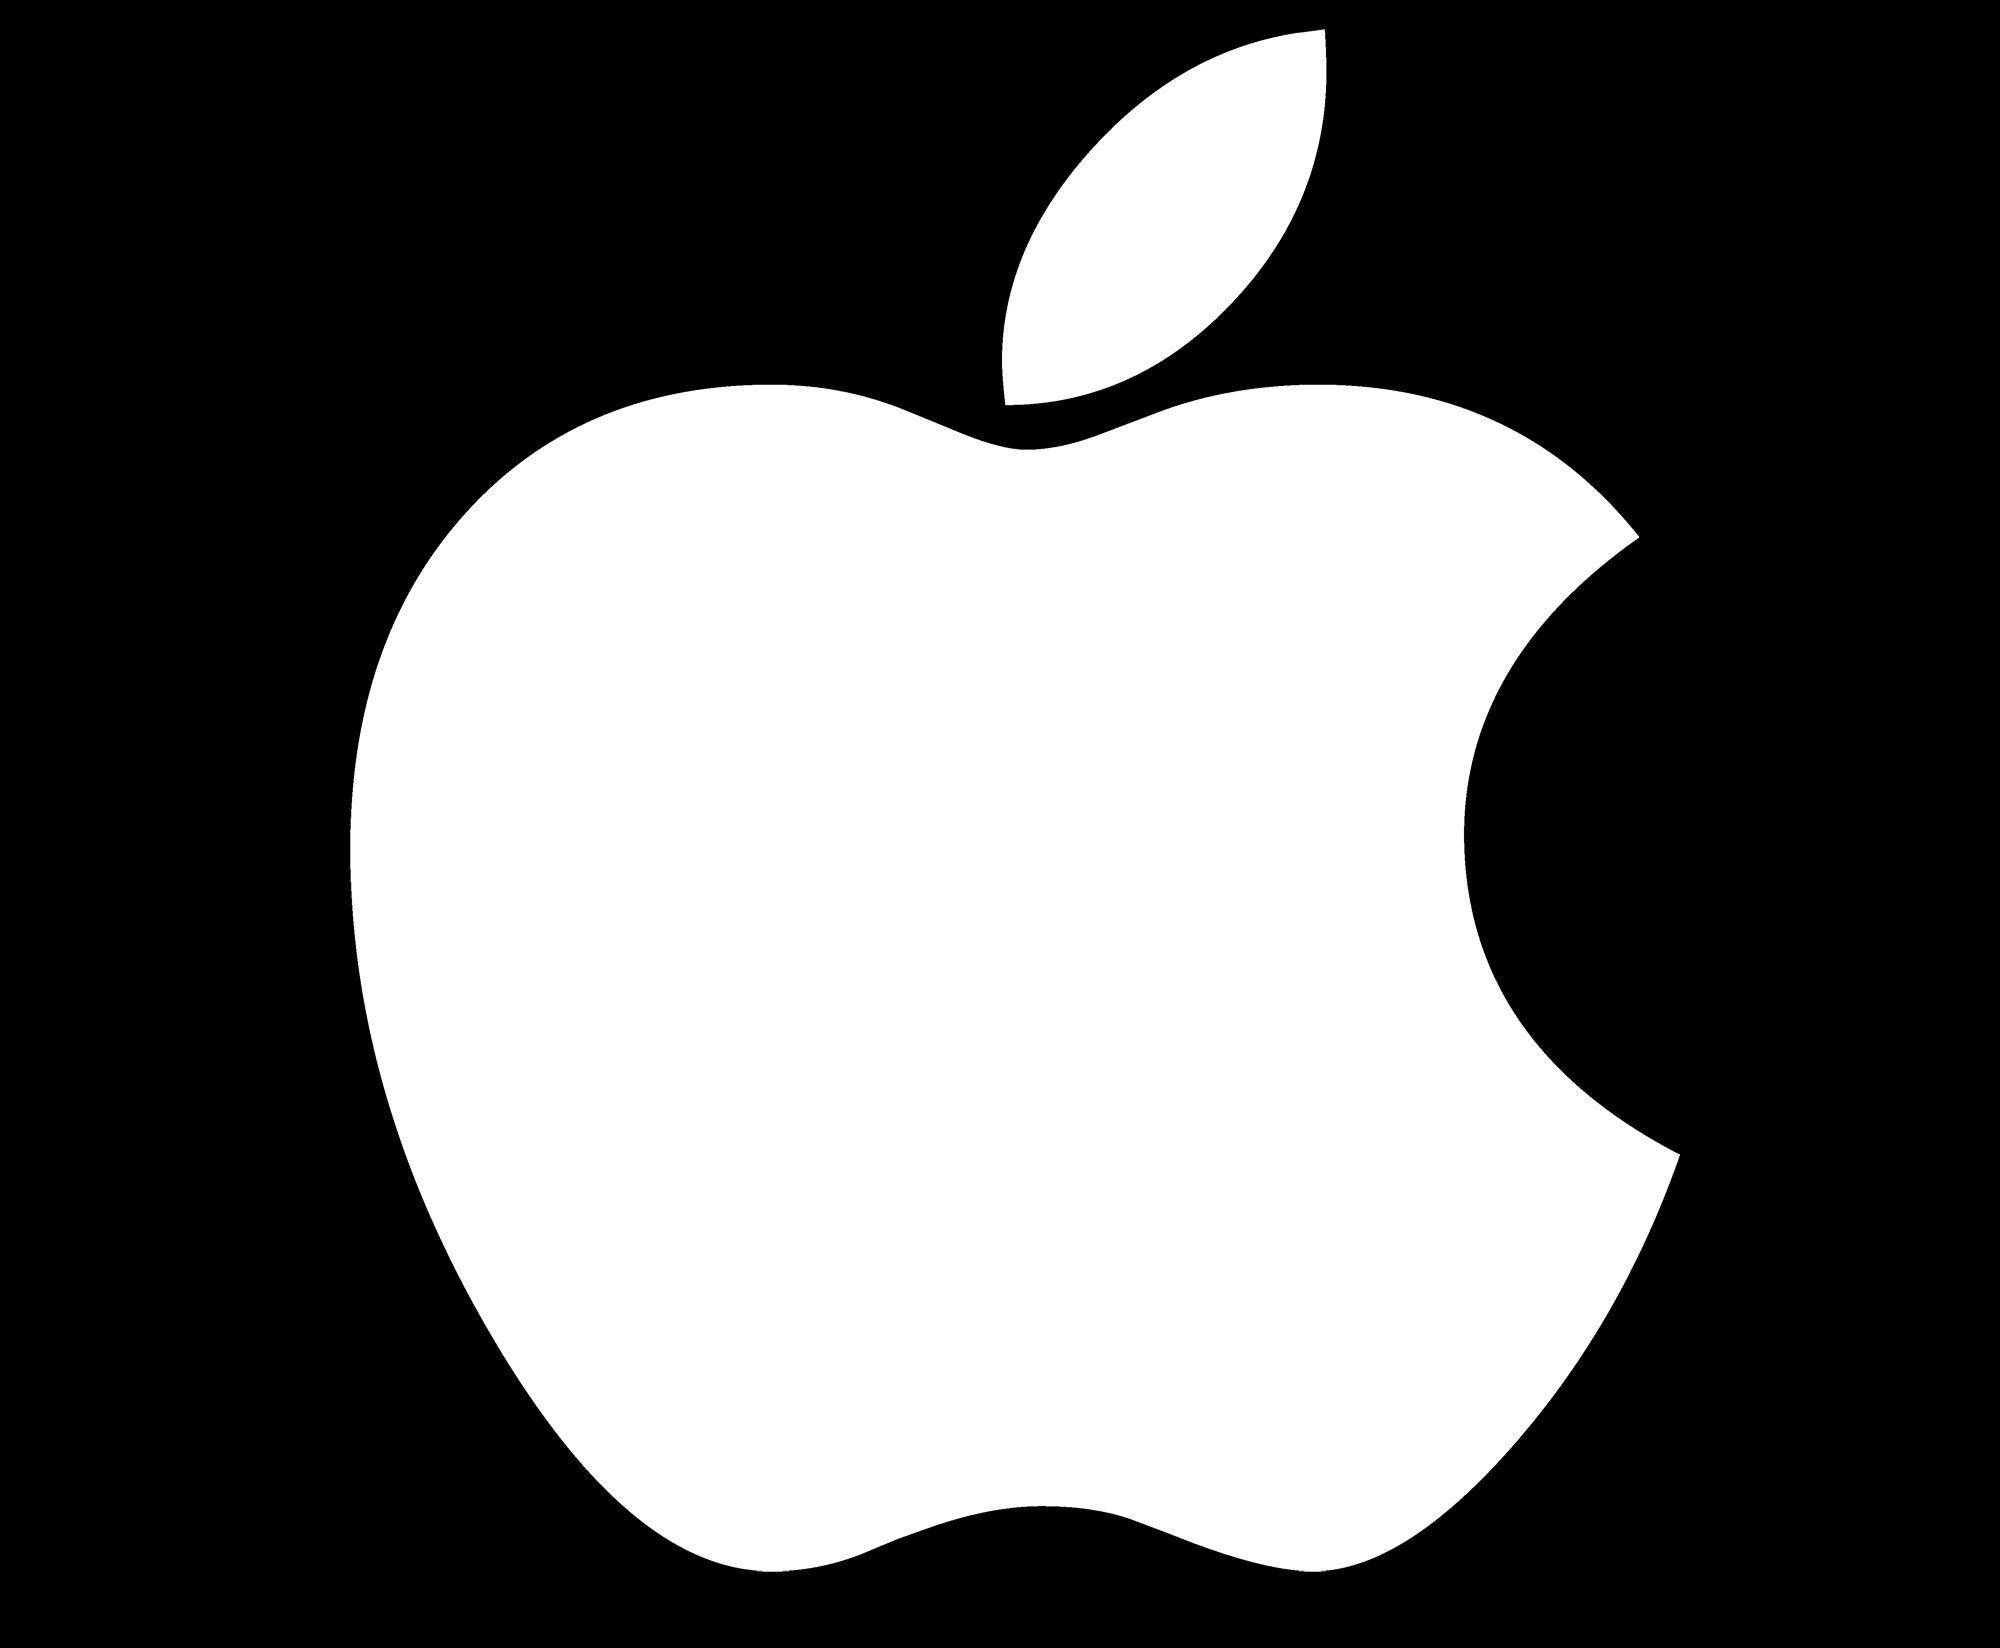 Apple Company Logo - Apple Logo, Apple Symbol Meaning, History and Evolution